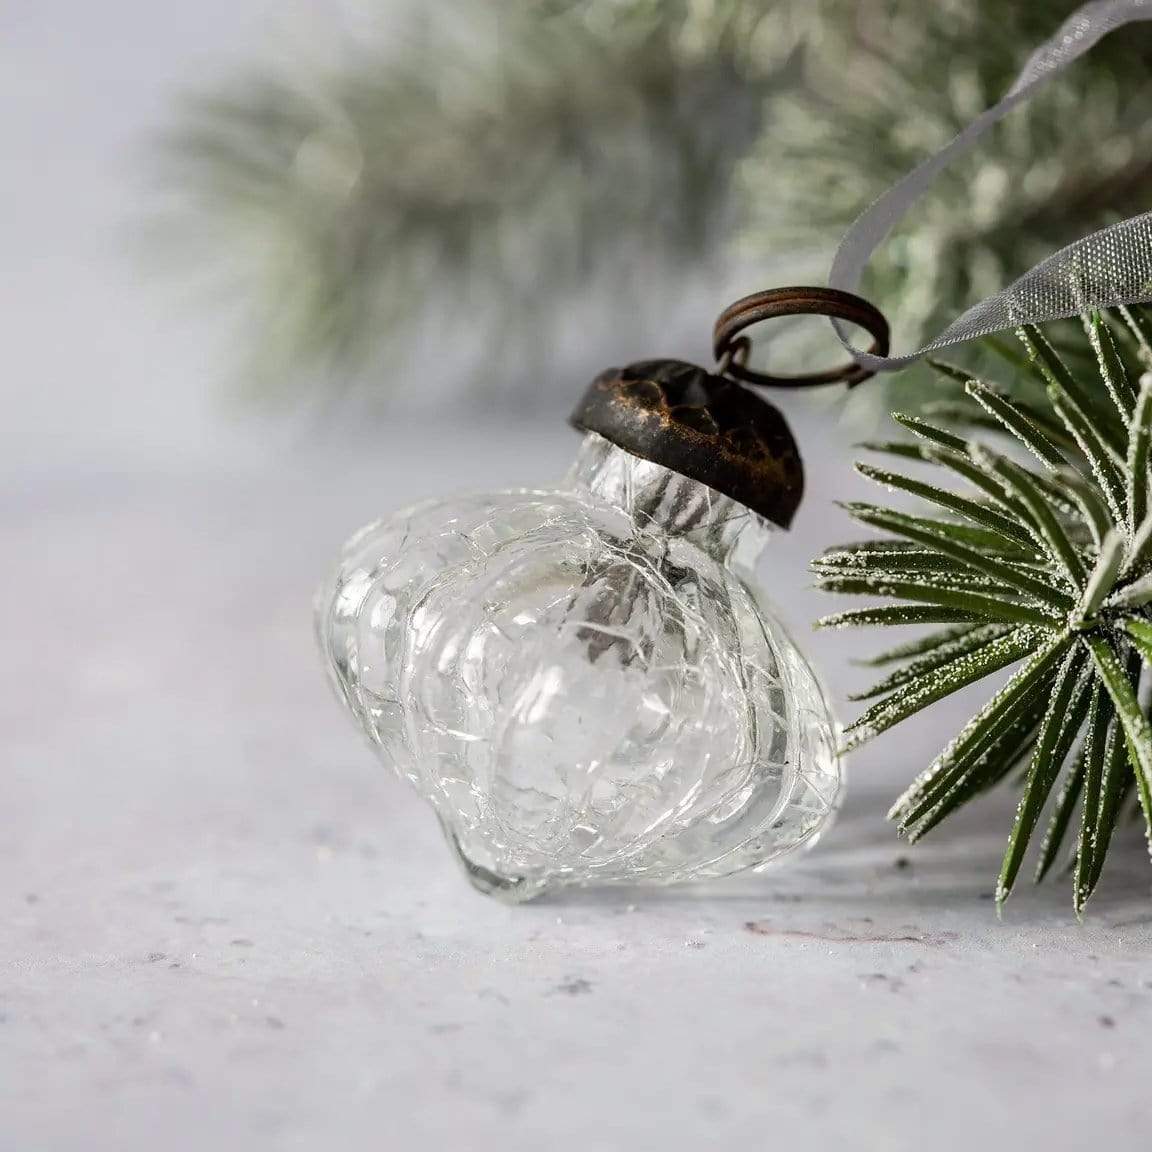 Vintage Style Crackle Glass Bulb Ornaments - Set of 6